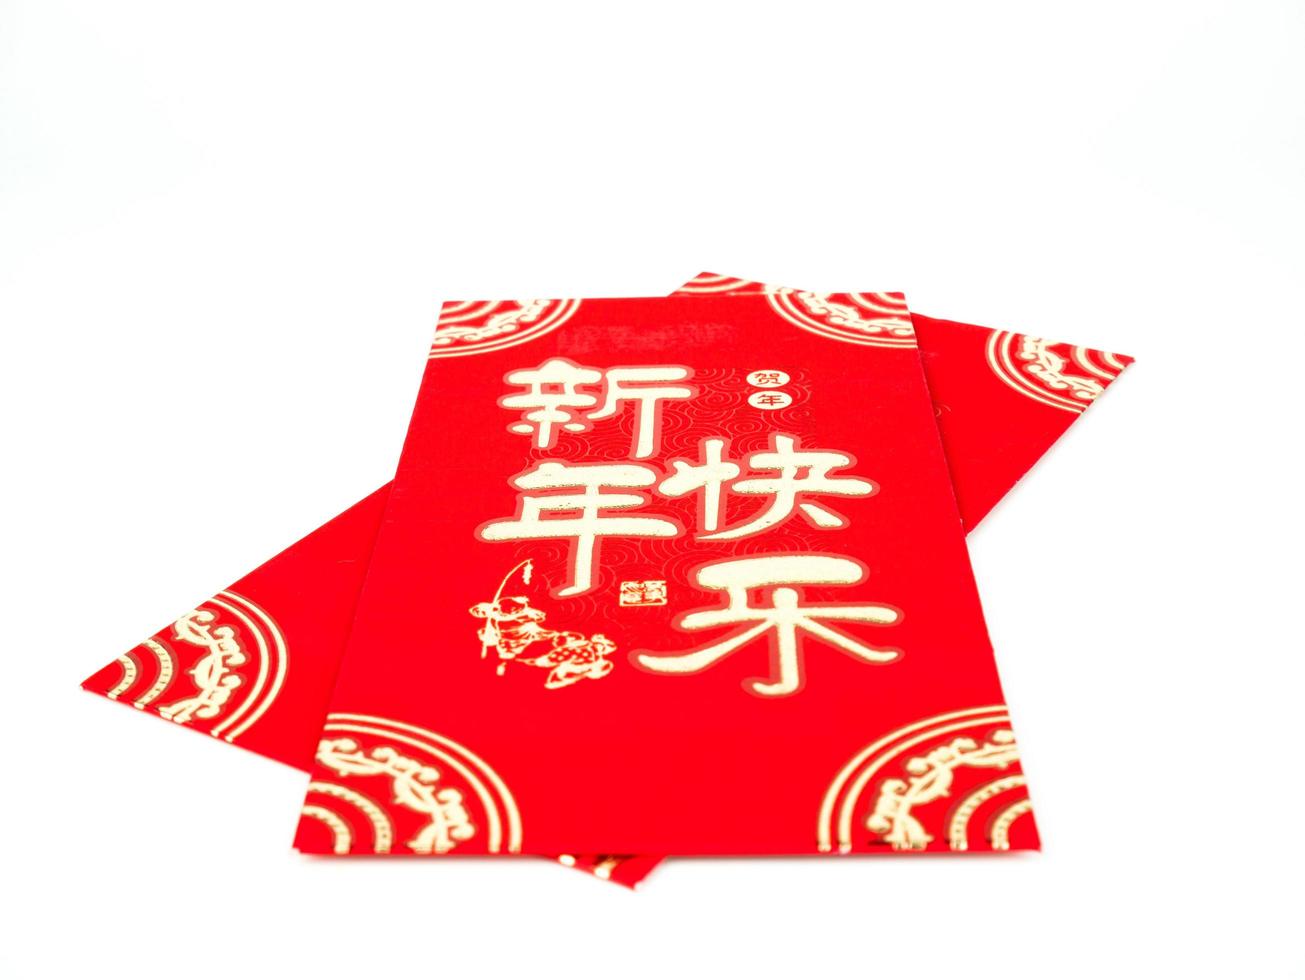 envelope vermelho isolado no fundo branco para presente ano novo chinês. texto chinês no envelope significa feliz ano novo chinês foto